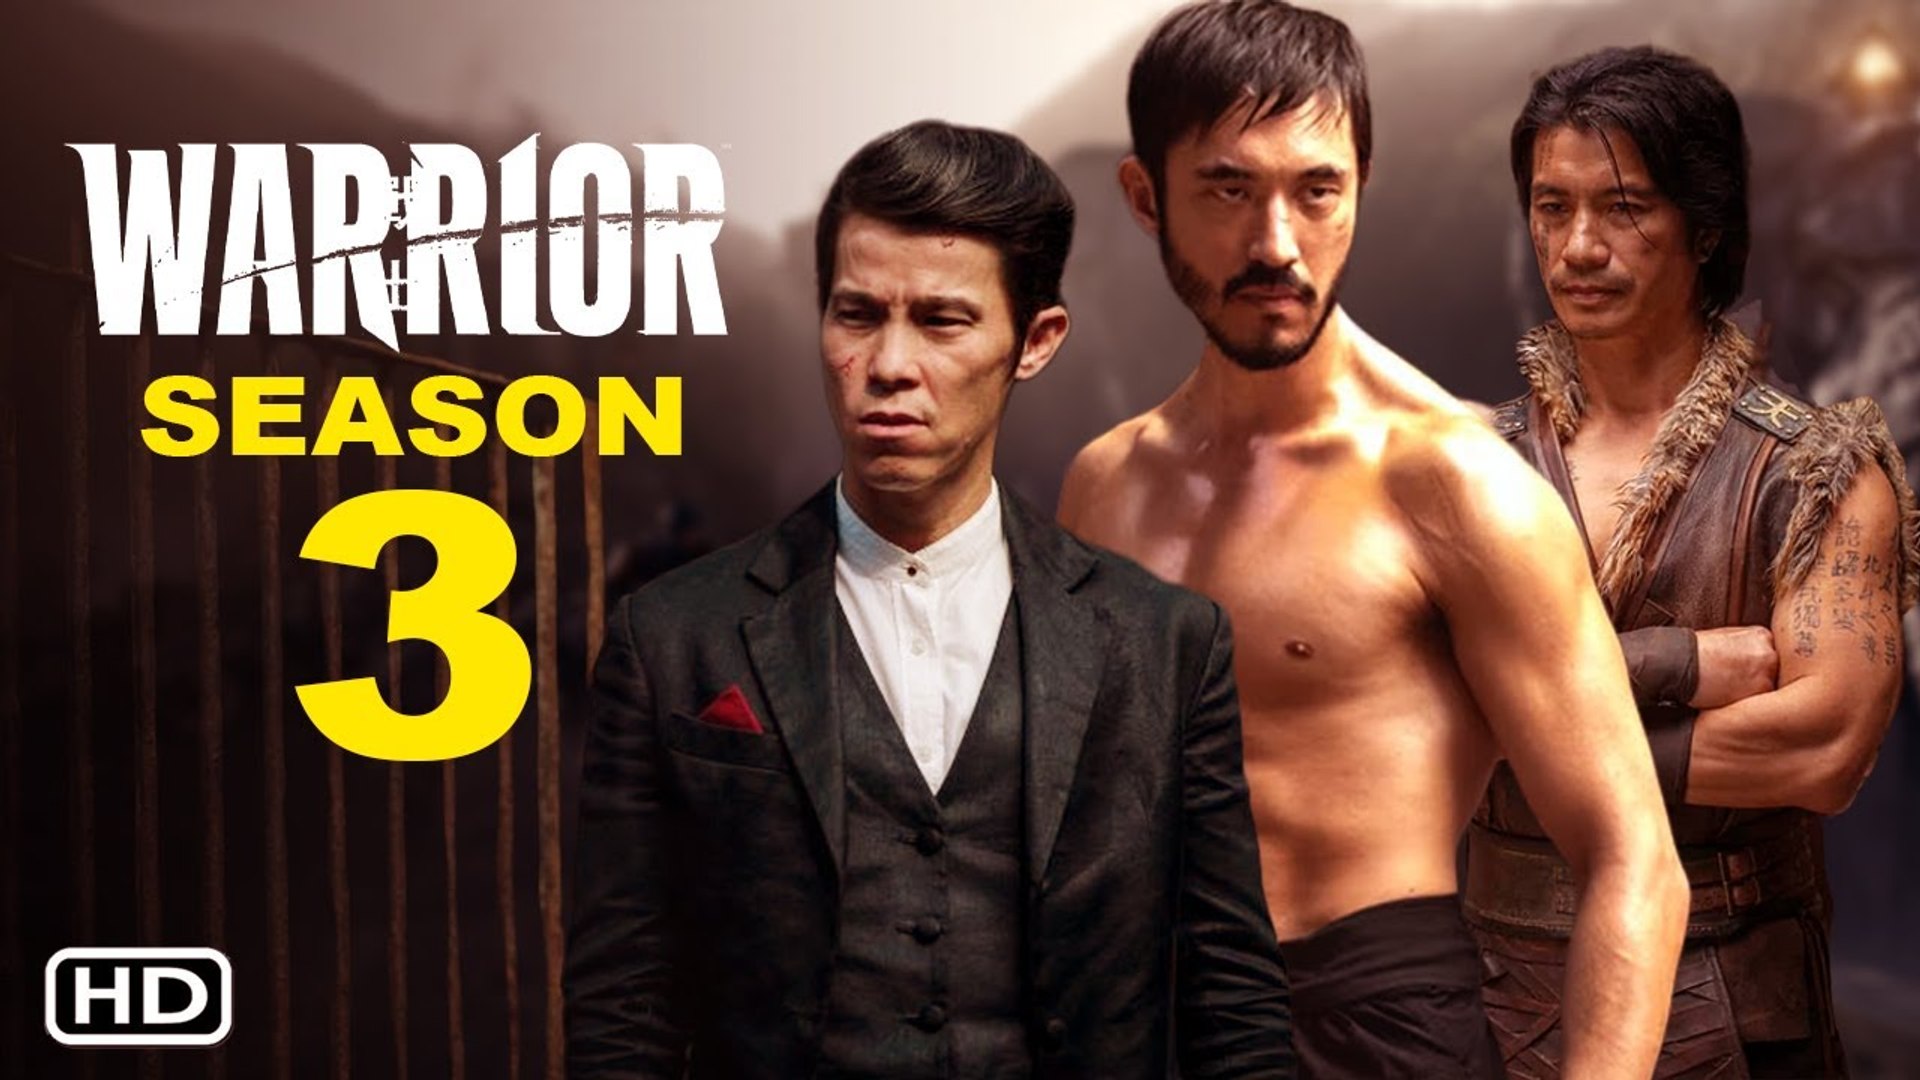 Warrior season 3: Warrior Season 3 Episode 5: Check release date